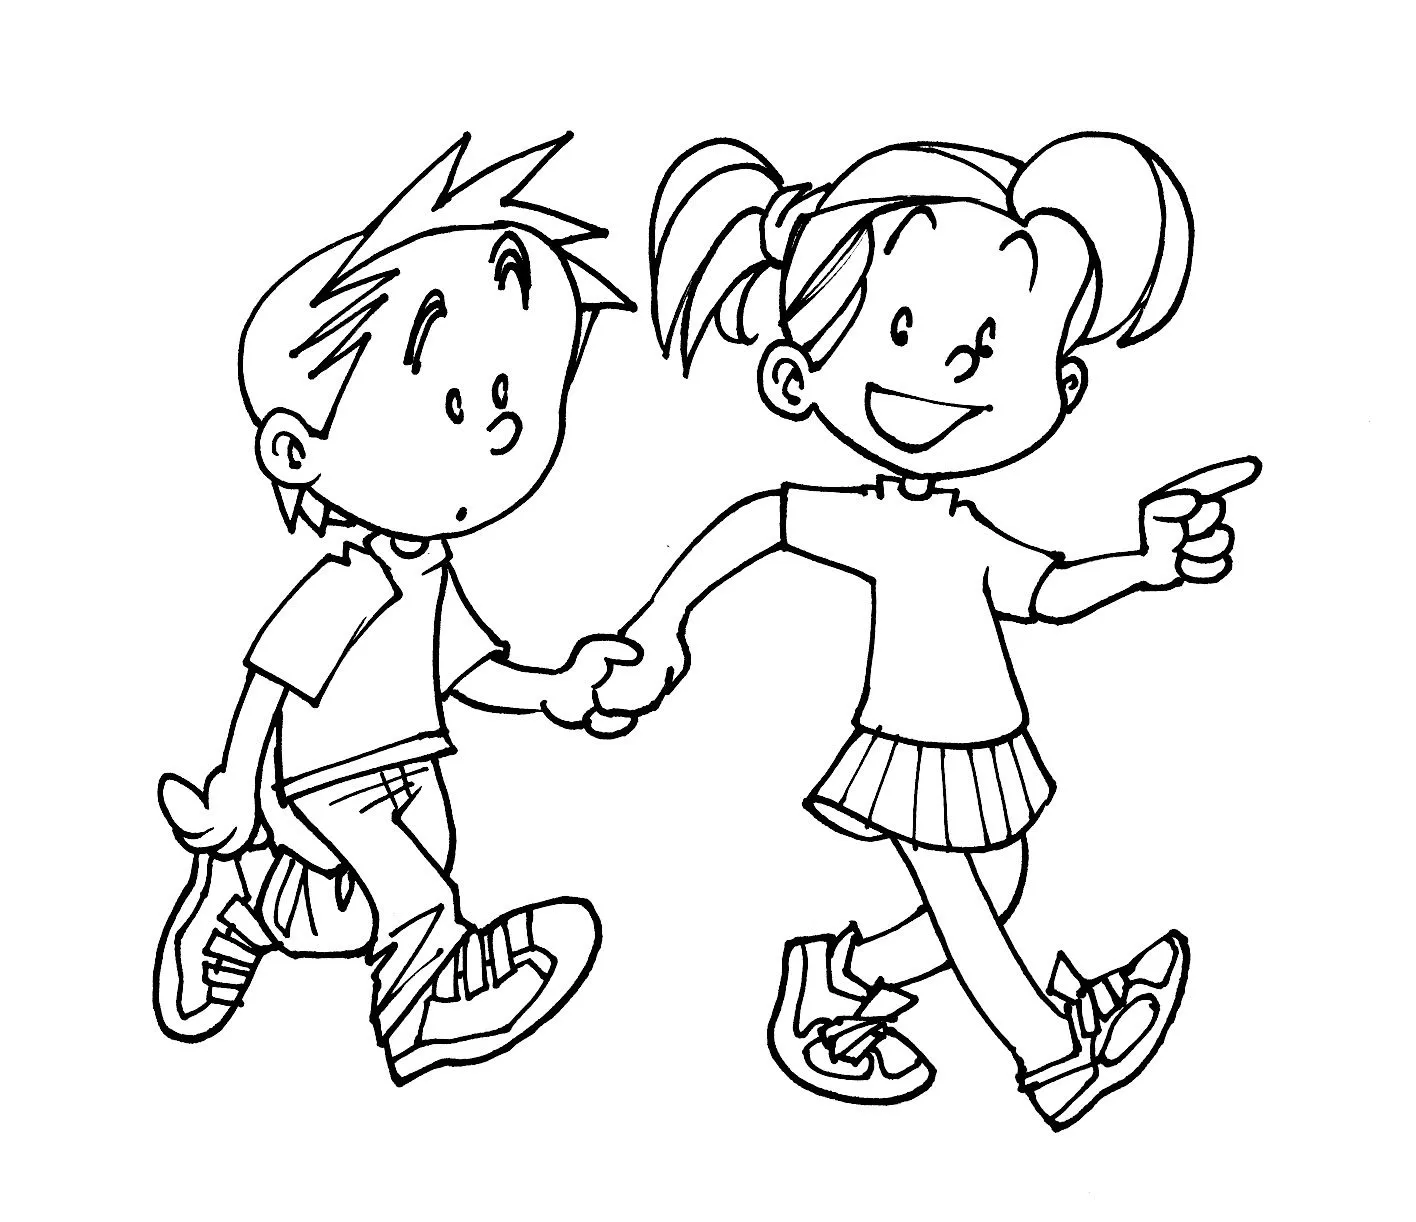 Dibujo de niños caminando - Imagui